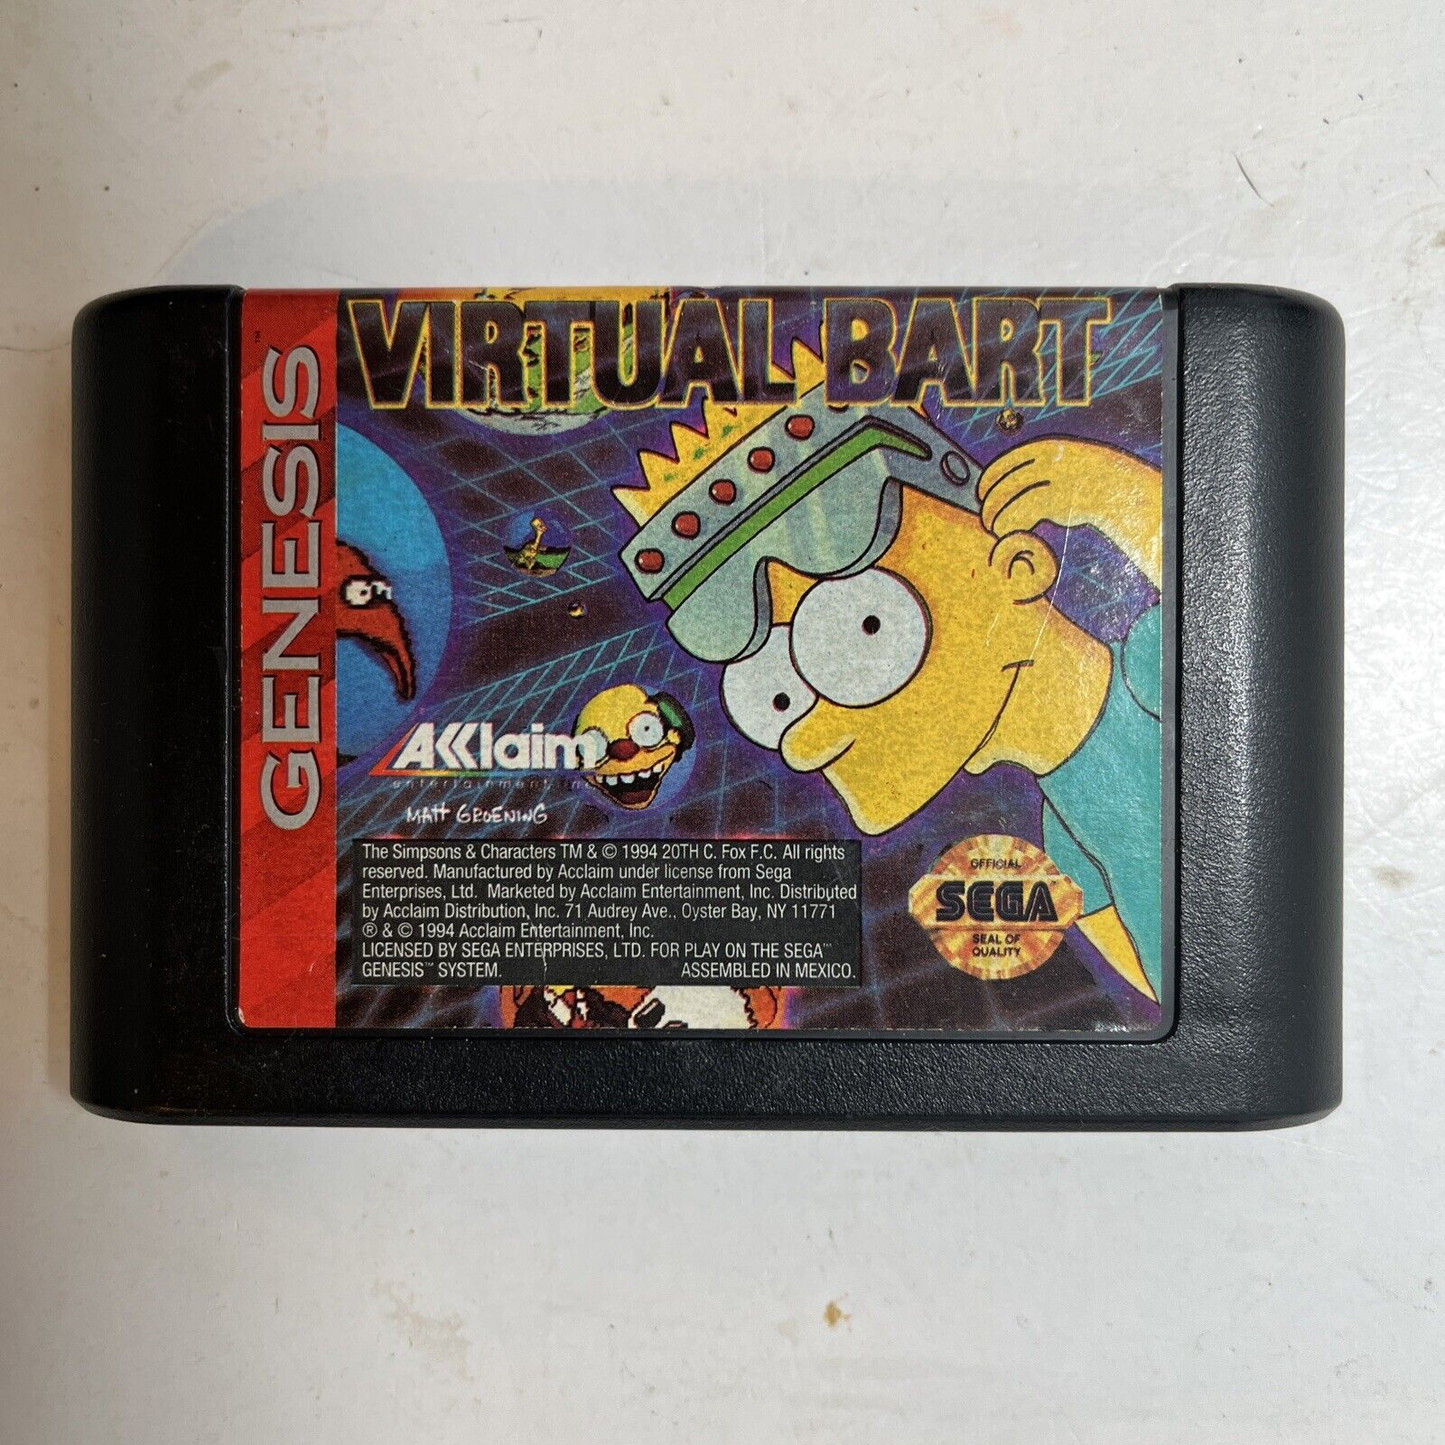 Virtual Bart - Genesis